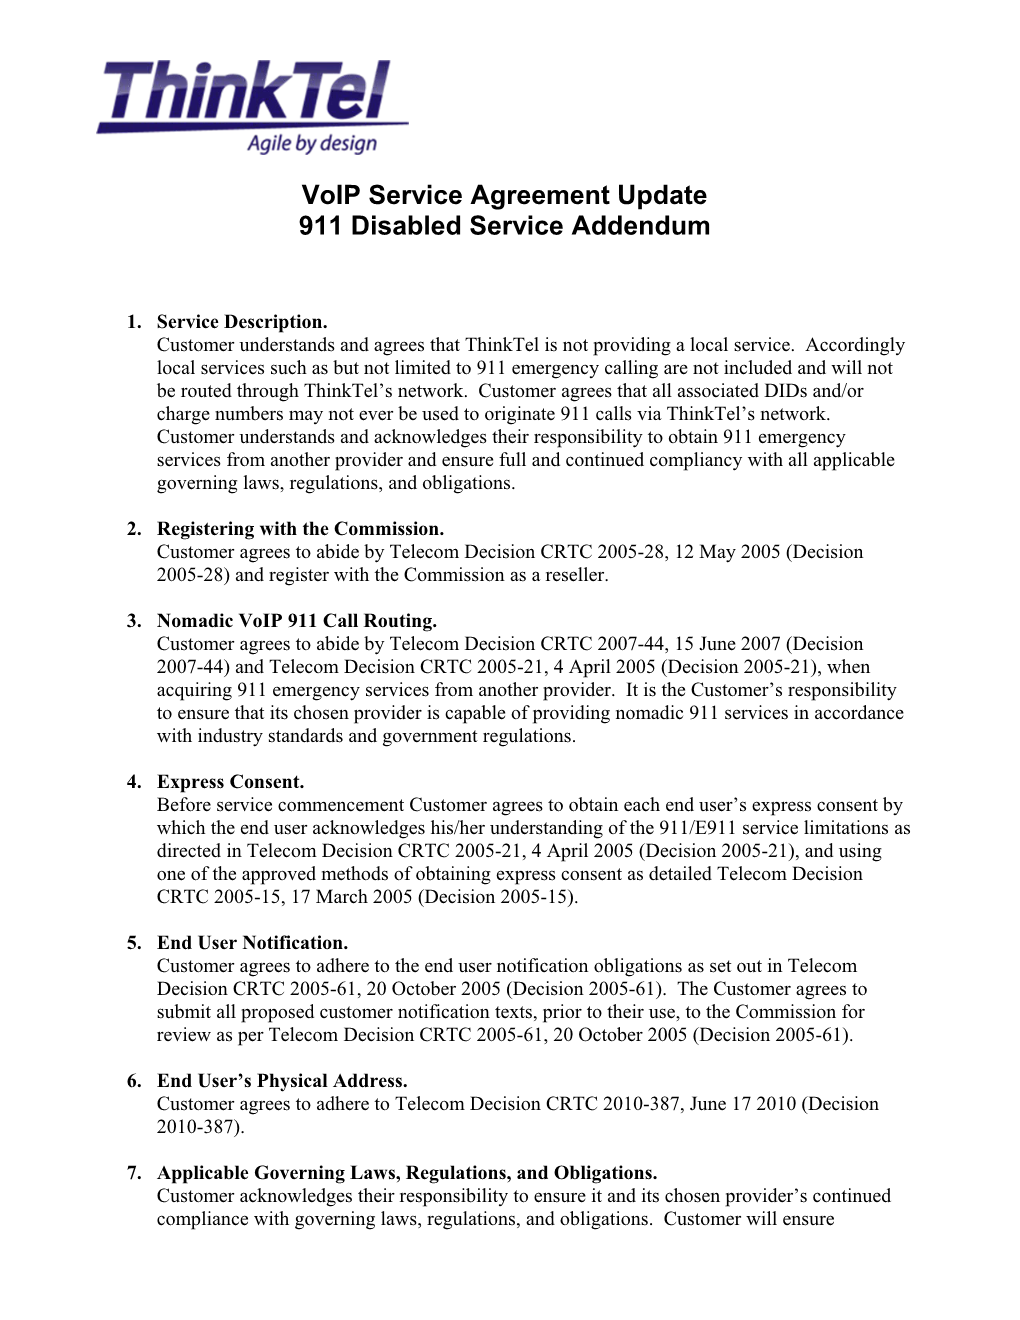 Thinktel Communications, Ltd. Voip Service Agreement Update